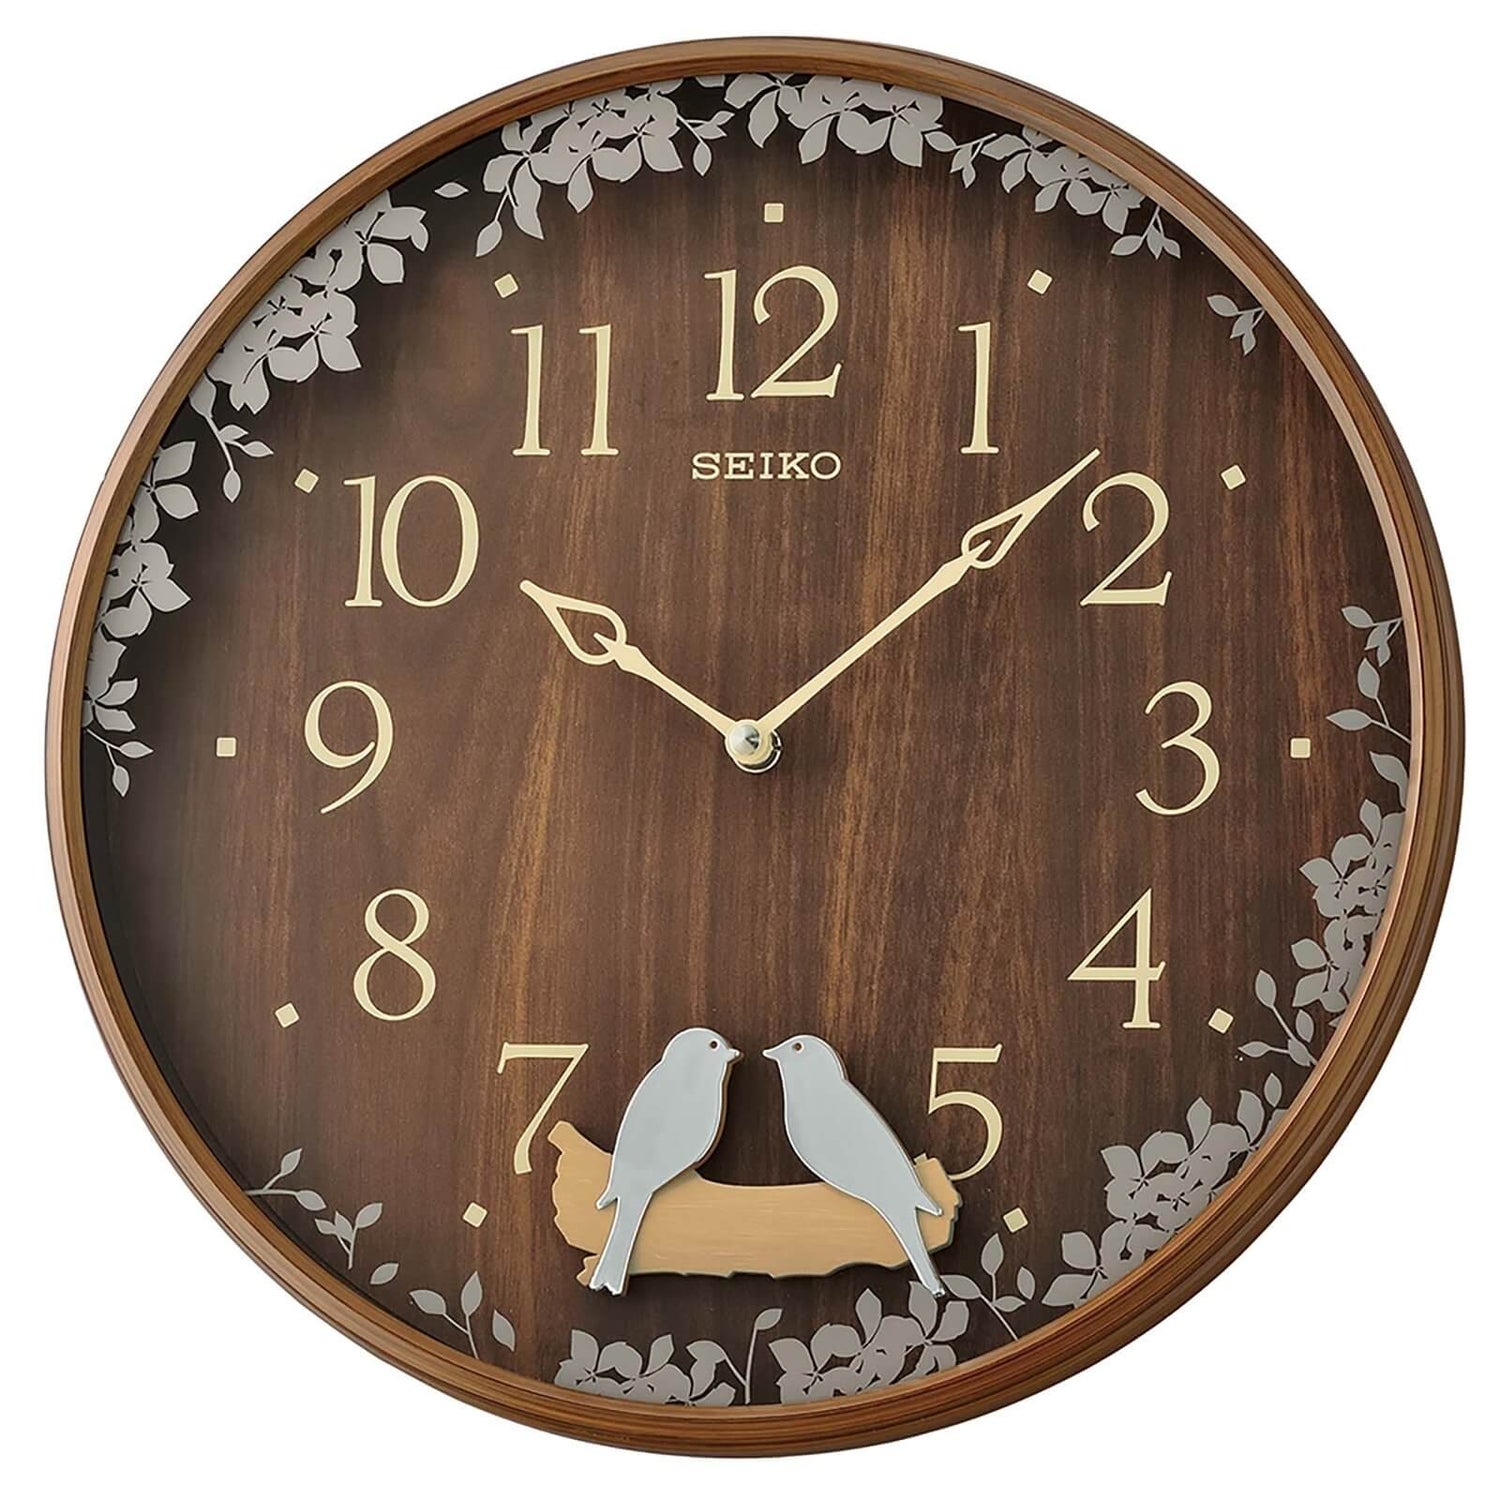 Seiko Bird Pendulum Wall Clock with Wood Effect Case | Homebase